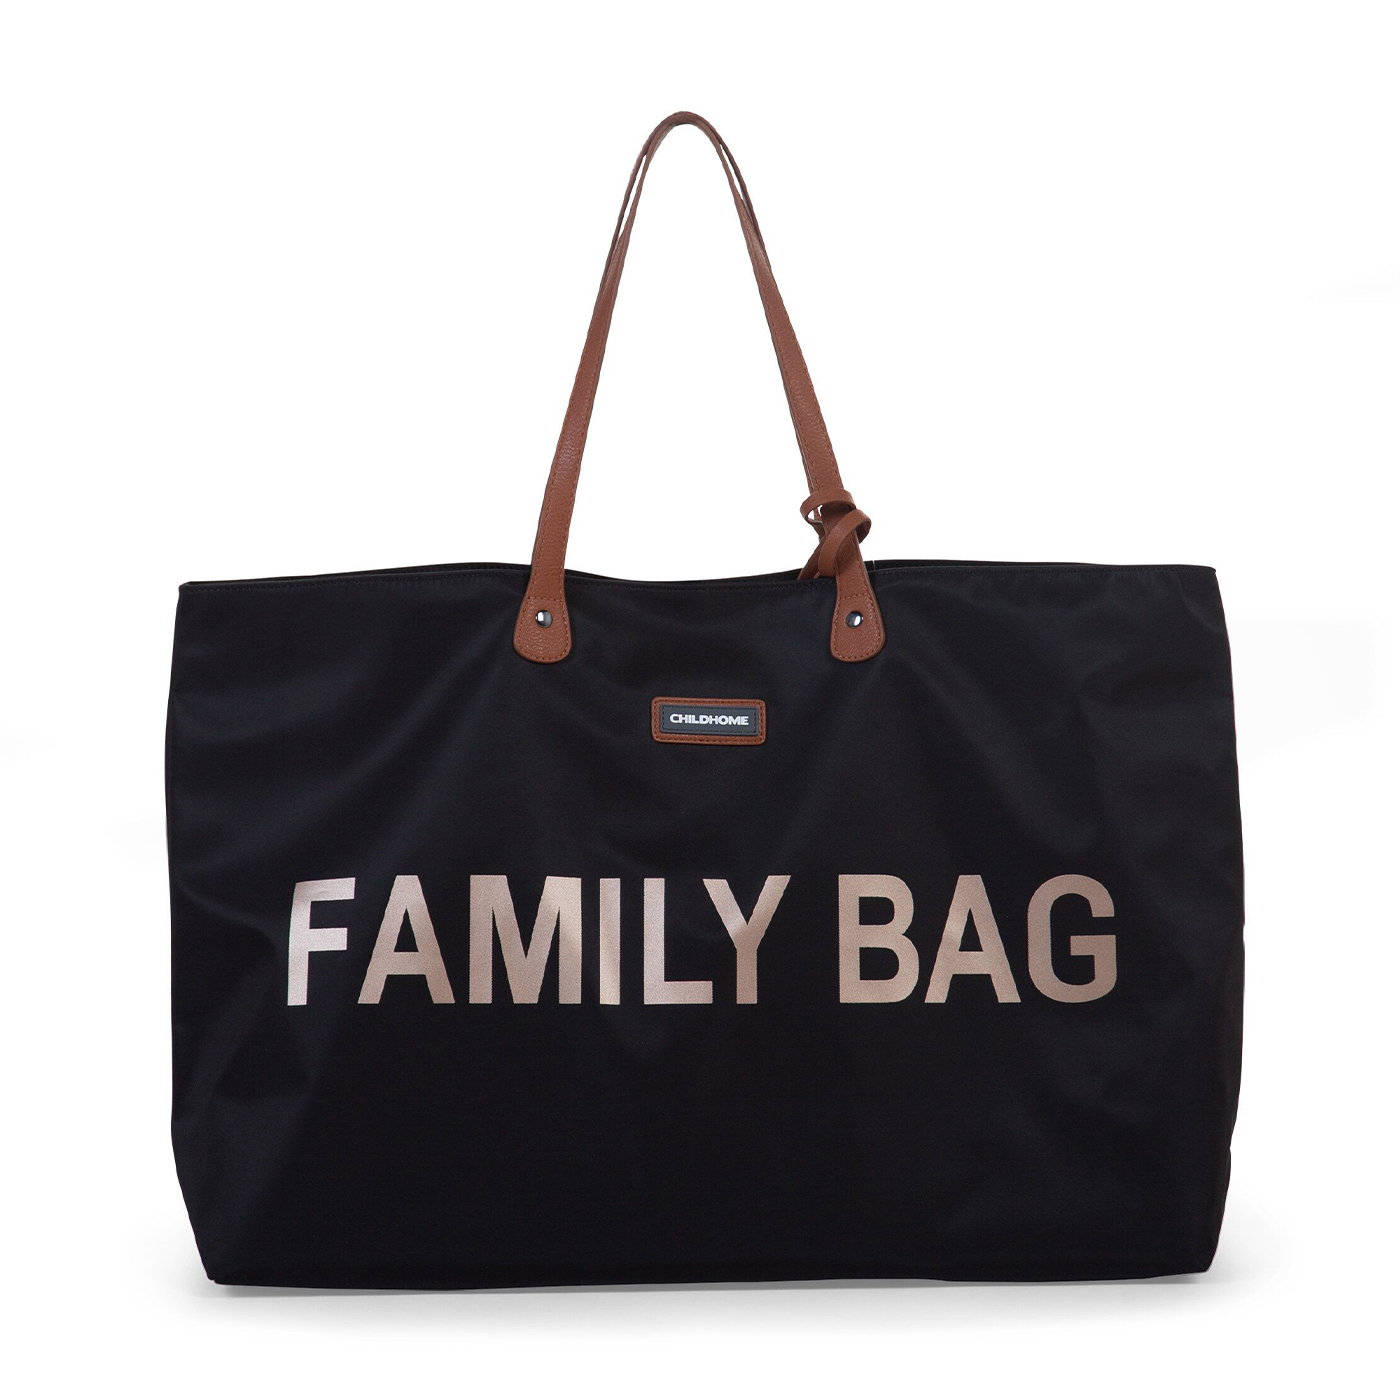 CHILDHOME Childhome Family Bag Anne Bebek Çantası | Siyah & Gold